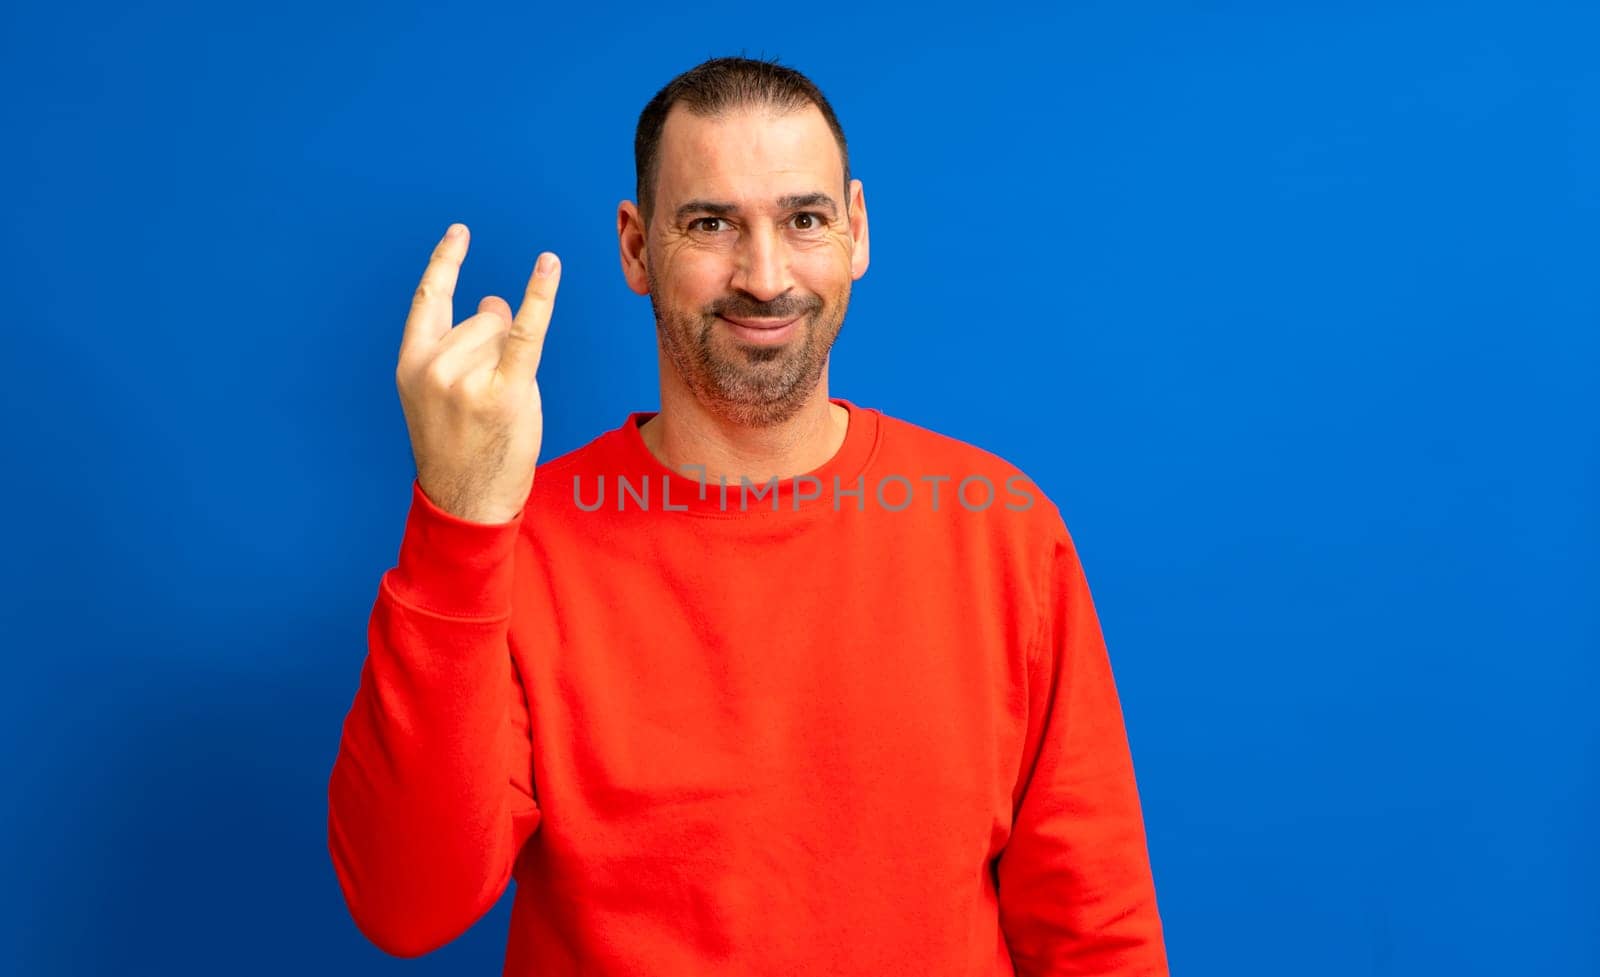 Hispanic man with beard in his 40s wearing a red sweatshirt doing rock gesture on blue studio background.